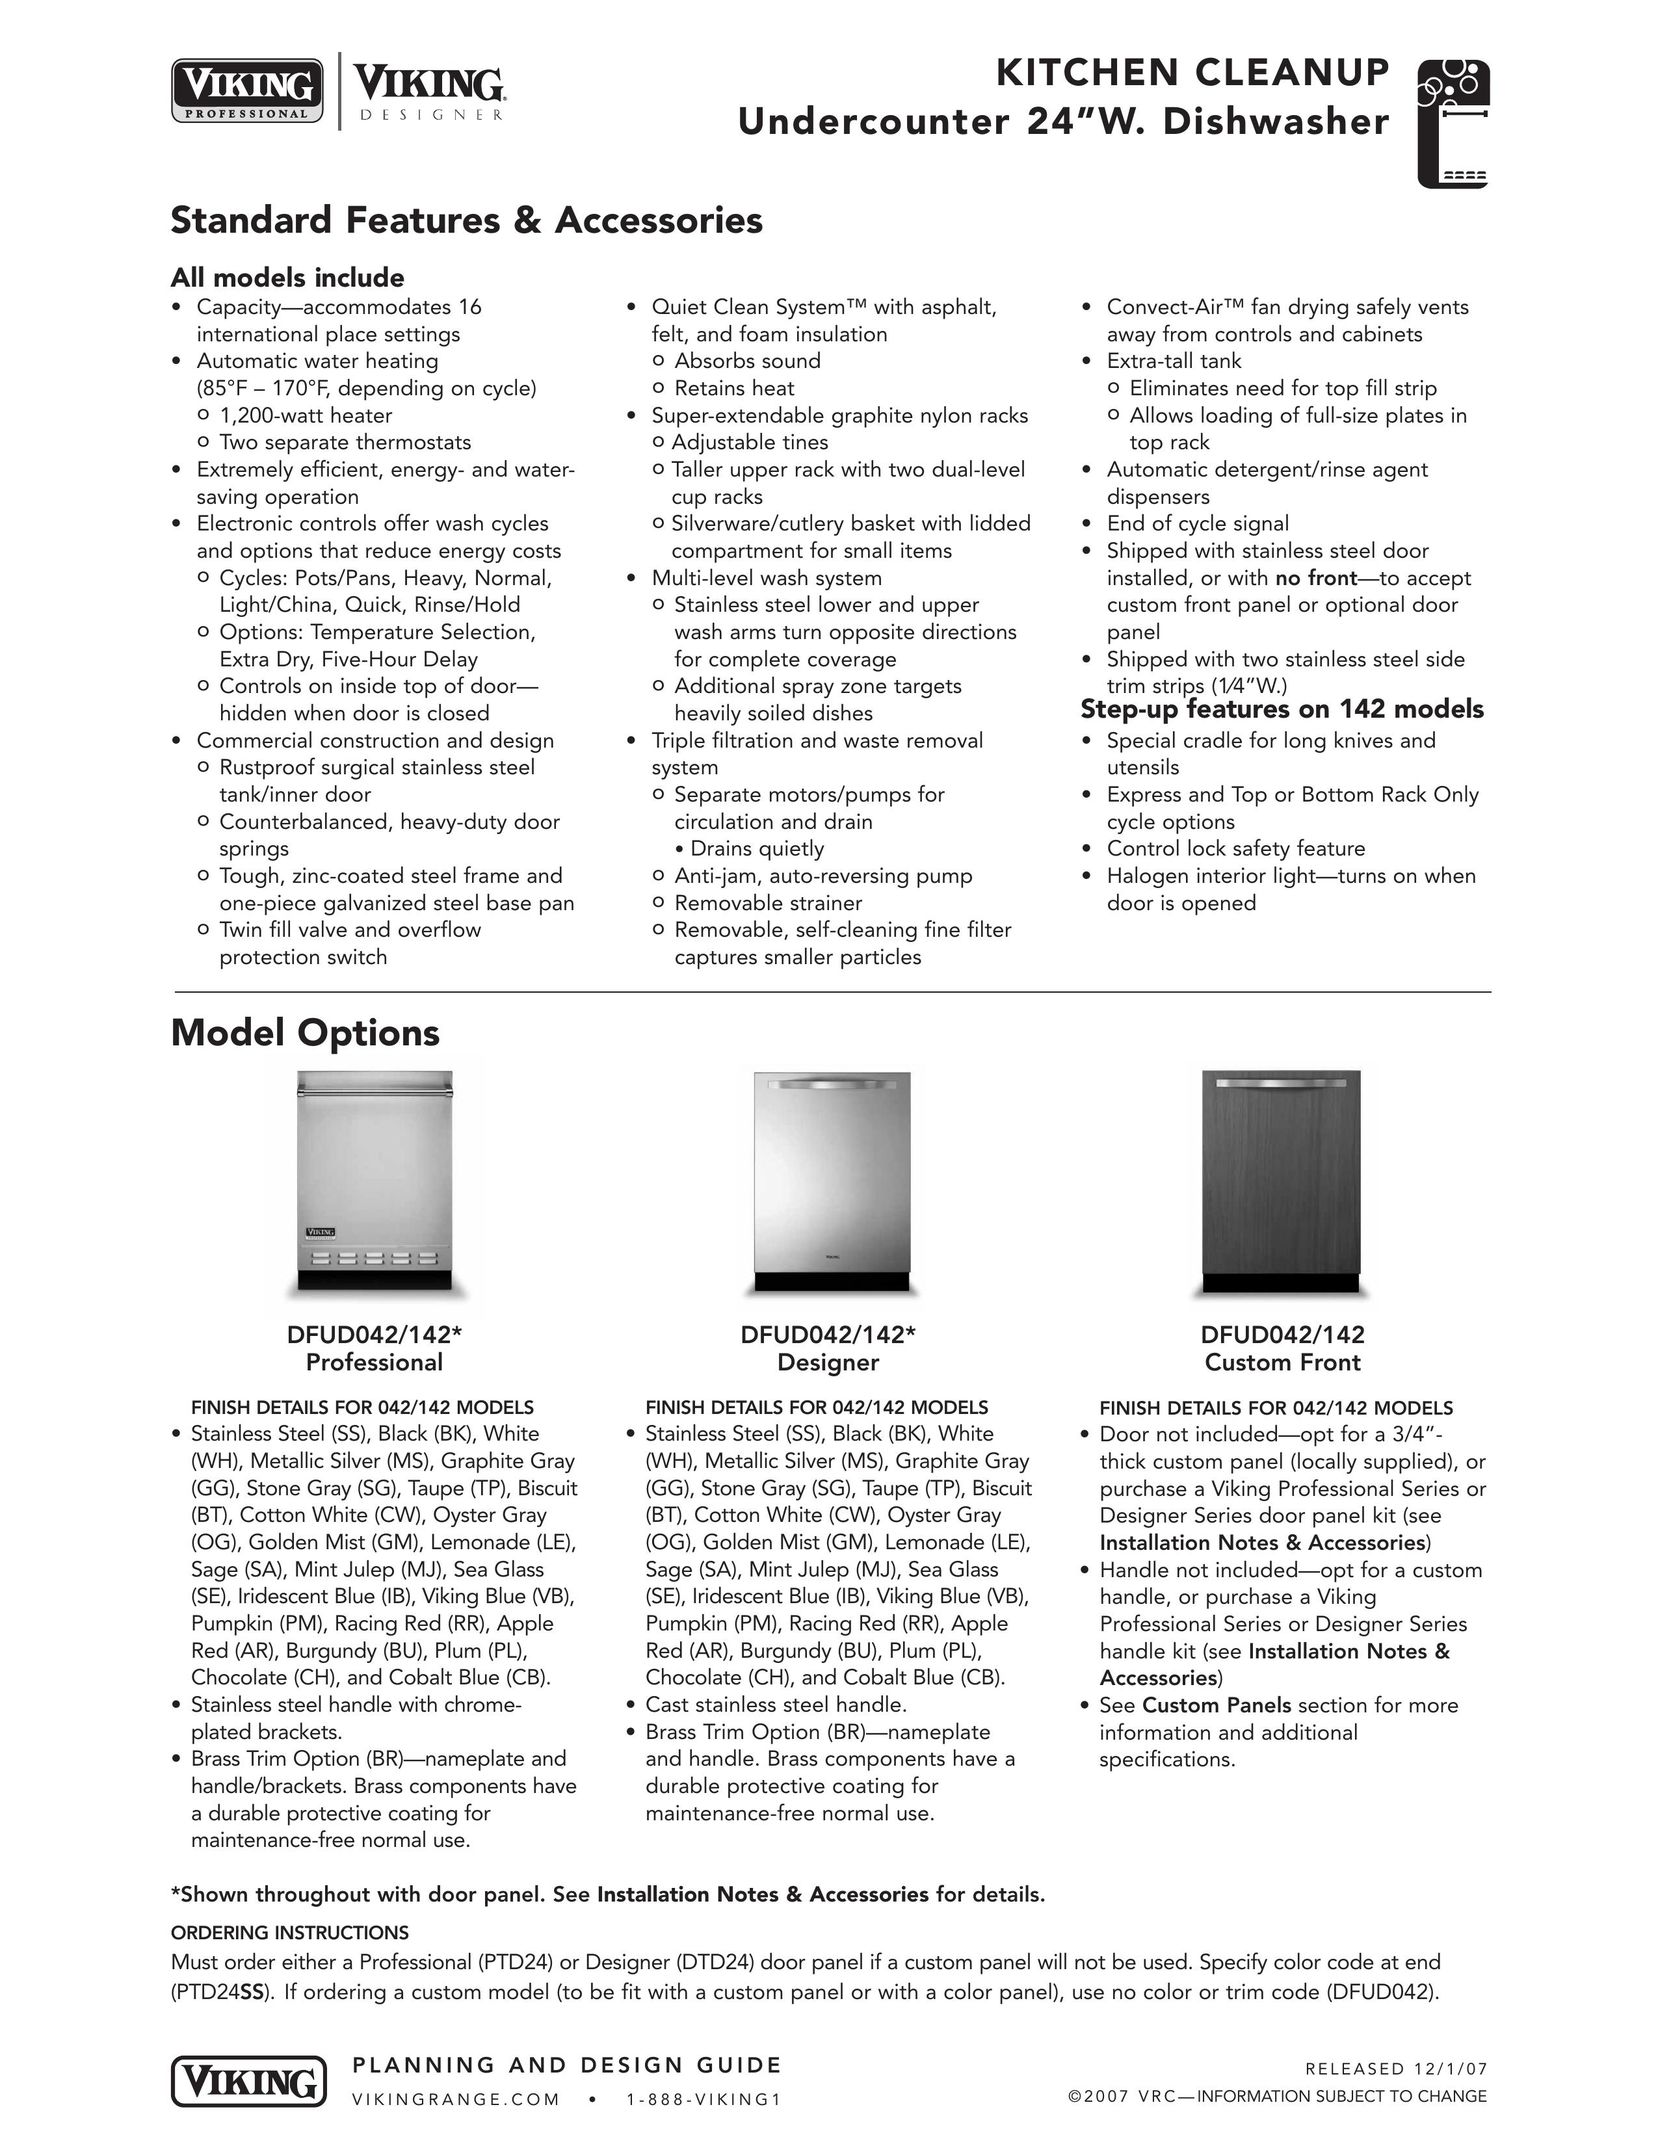 Viking DFUD042/142* Professional Dishwasher User Manual